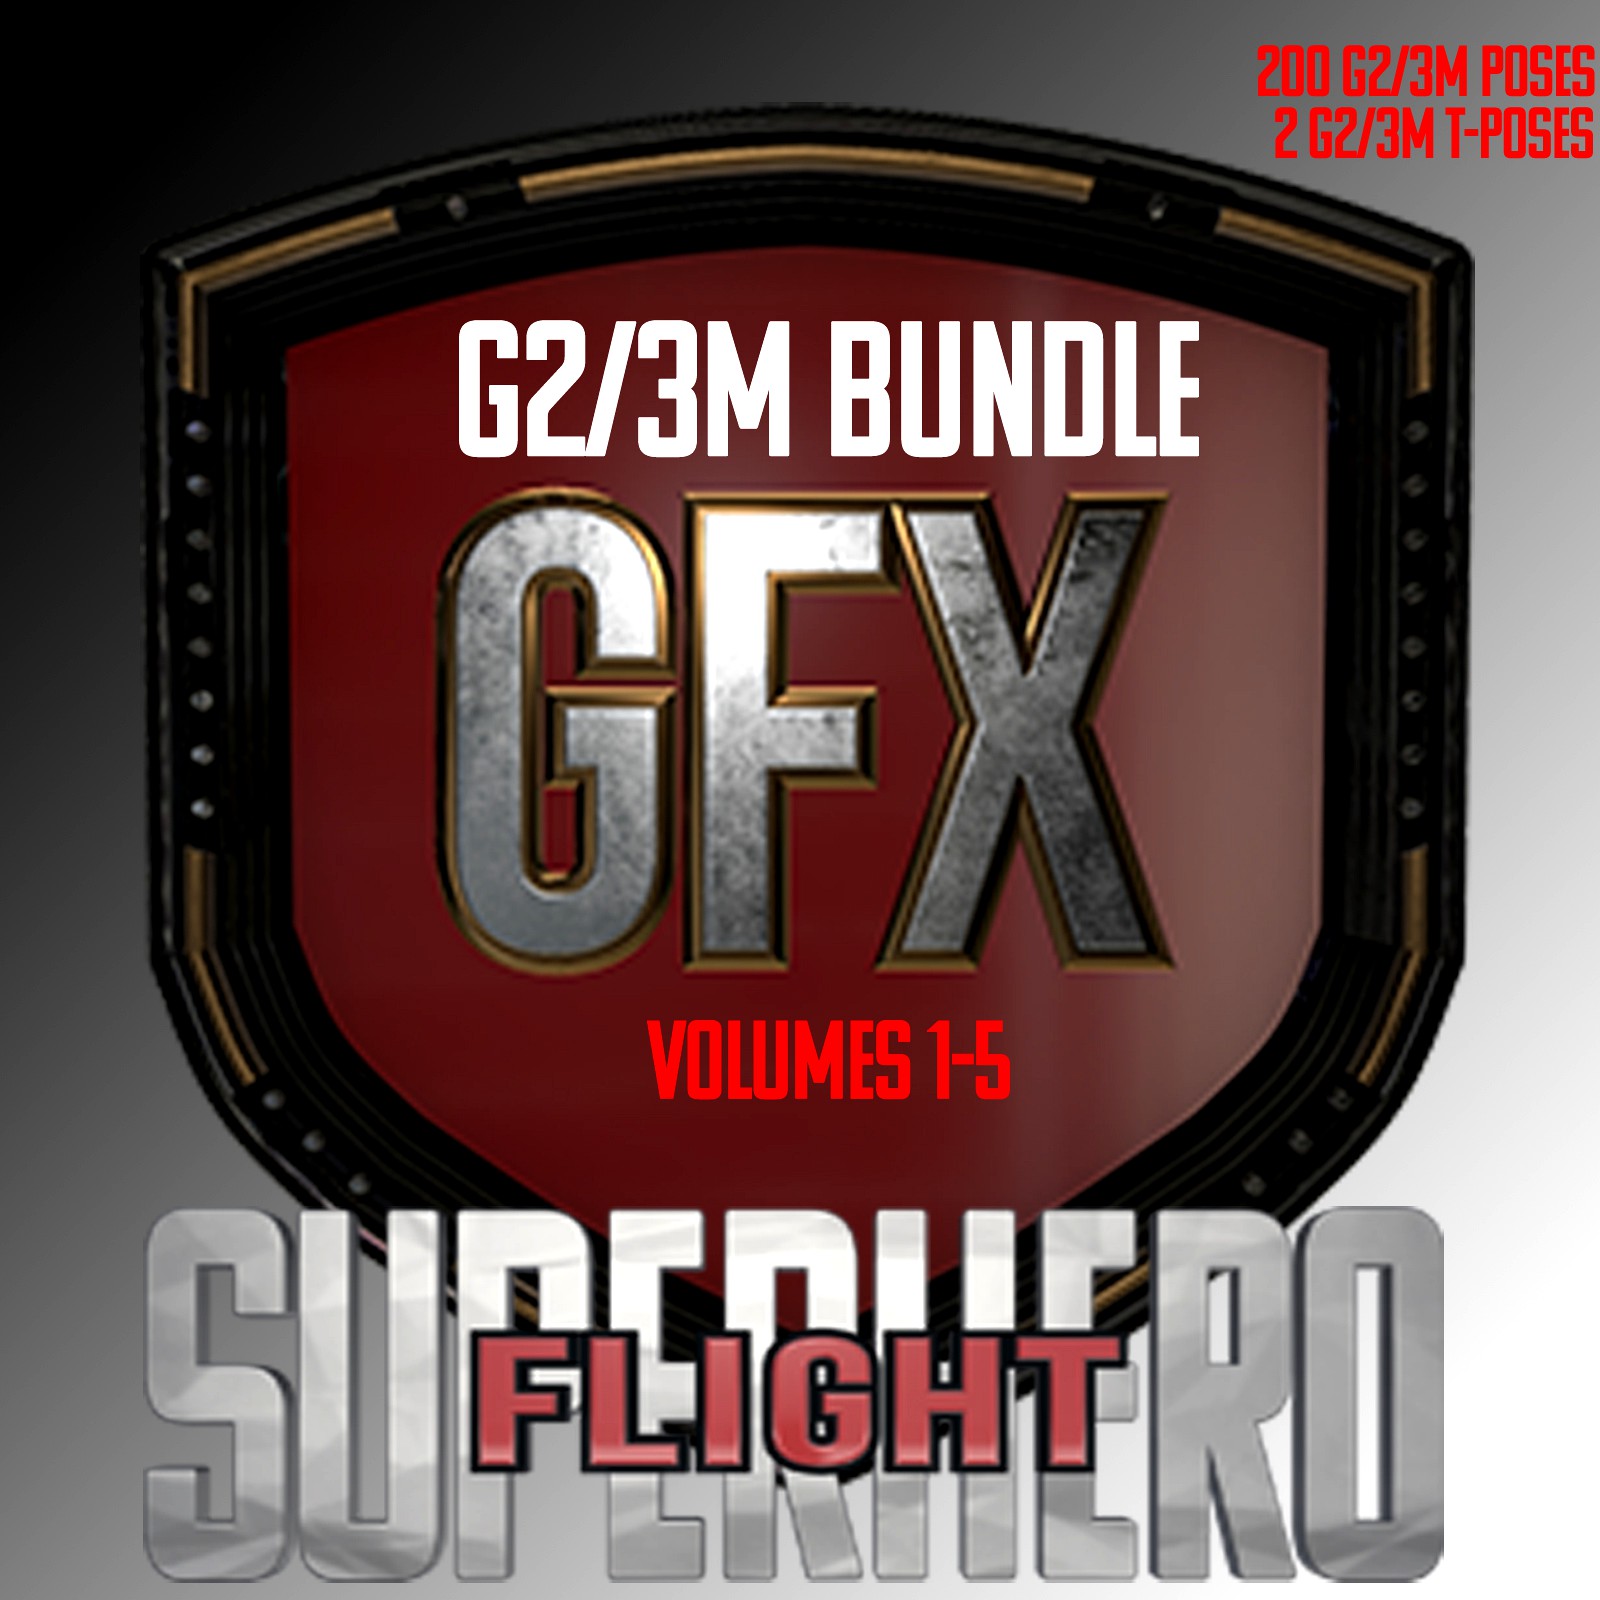 SuperHero Flight Bundle for G2M and G3M